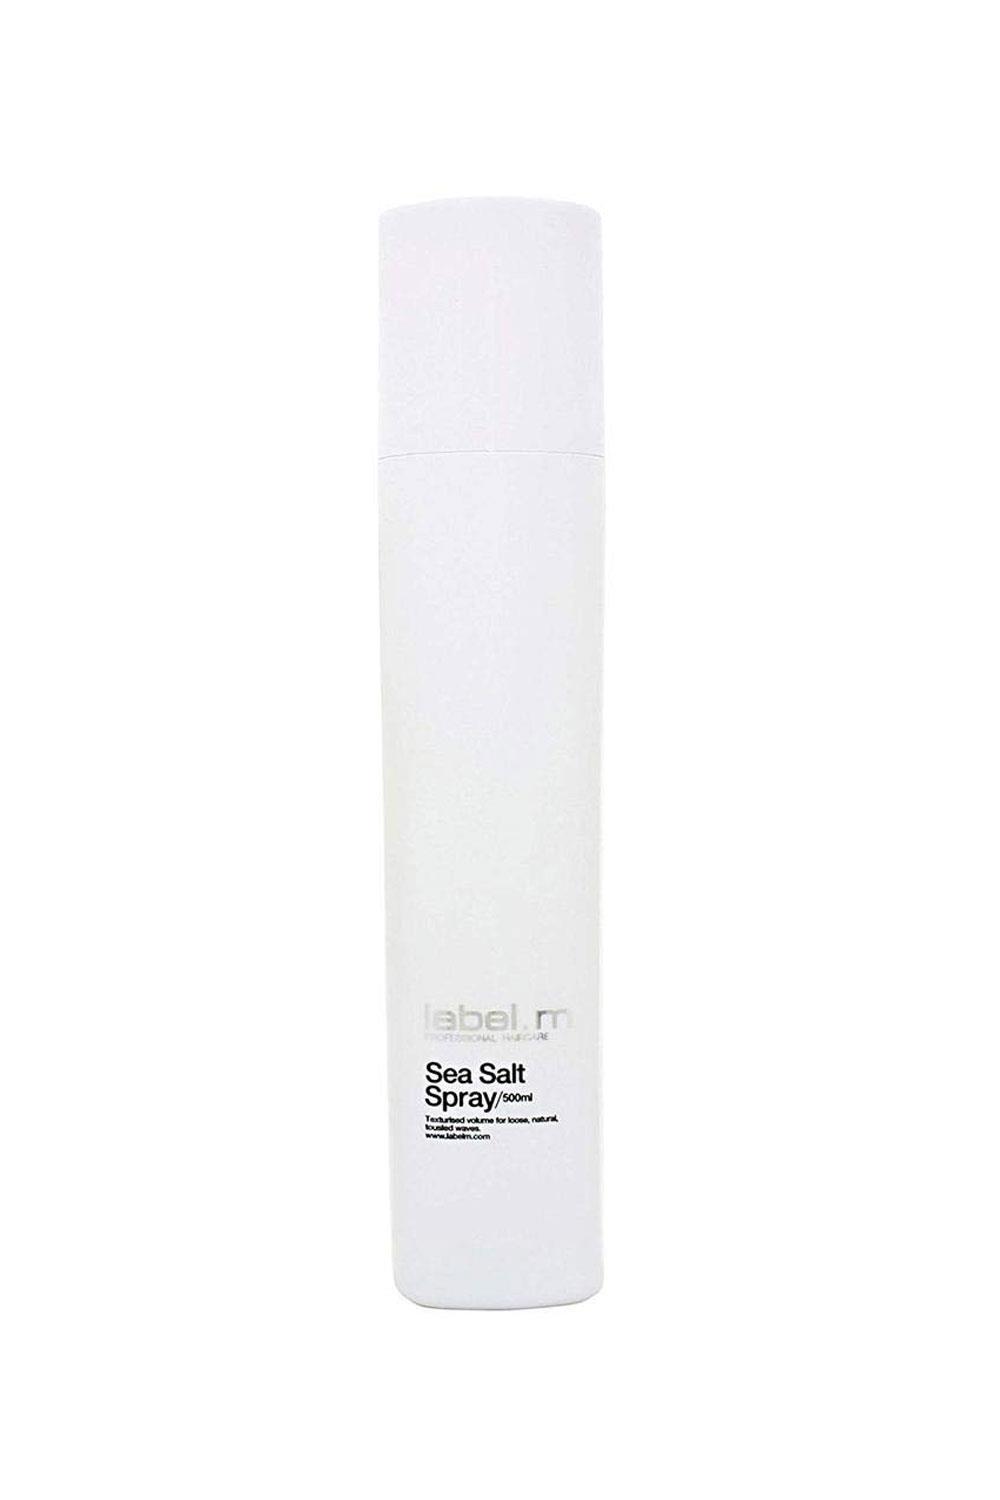 spray sal Sea Salt Spray de Label.M, 22,74€